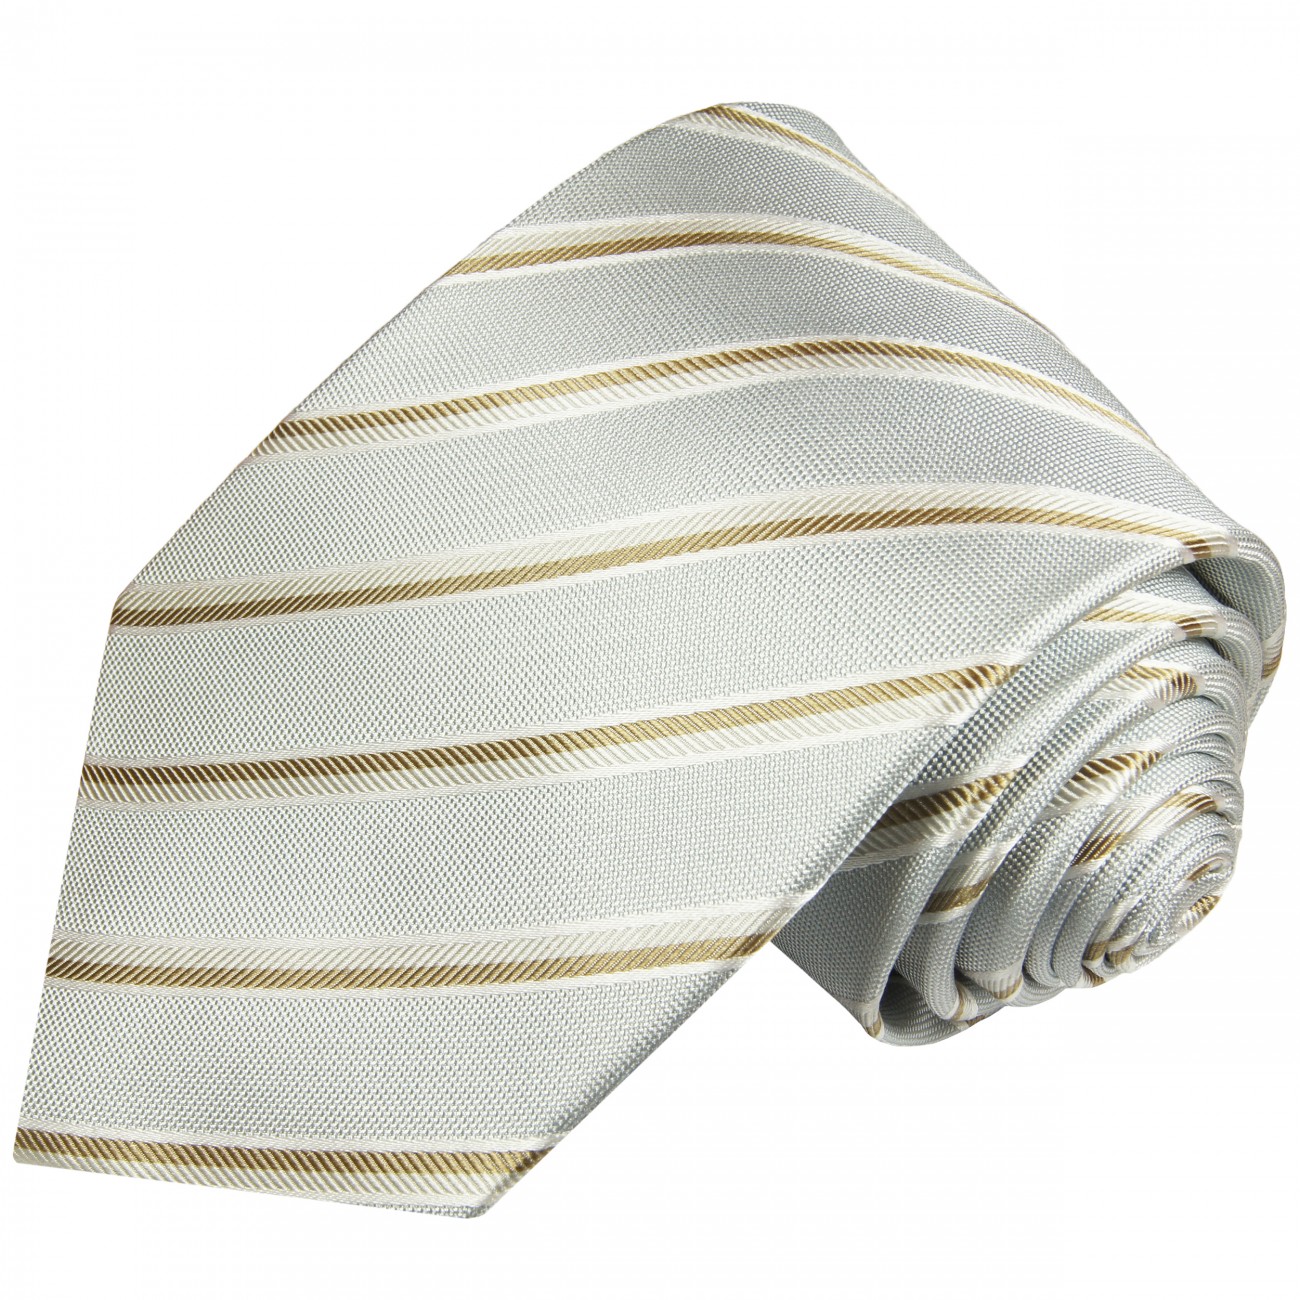 Krawatte hellblau gold gestreift 720